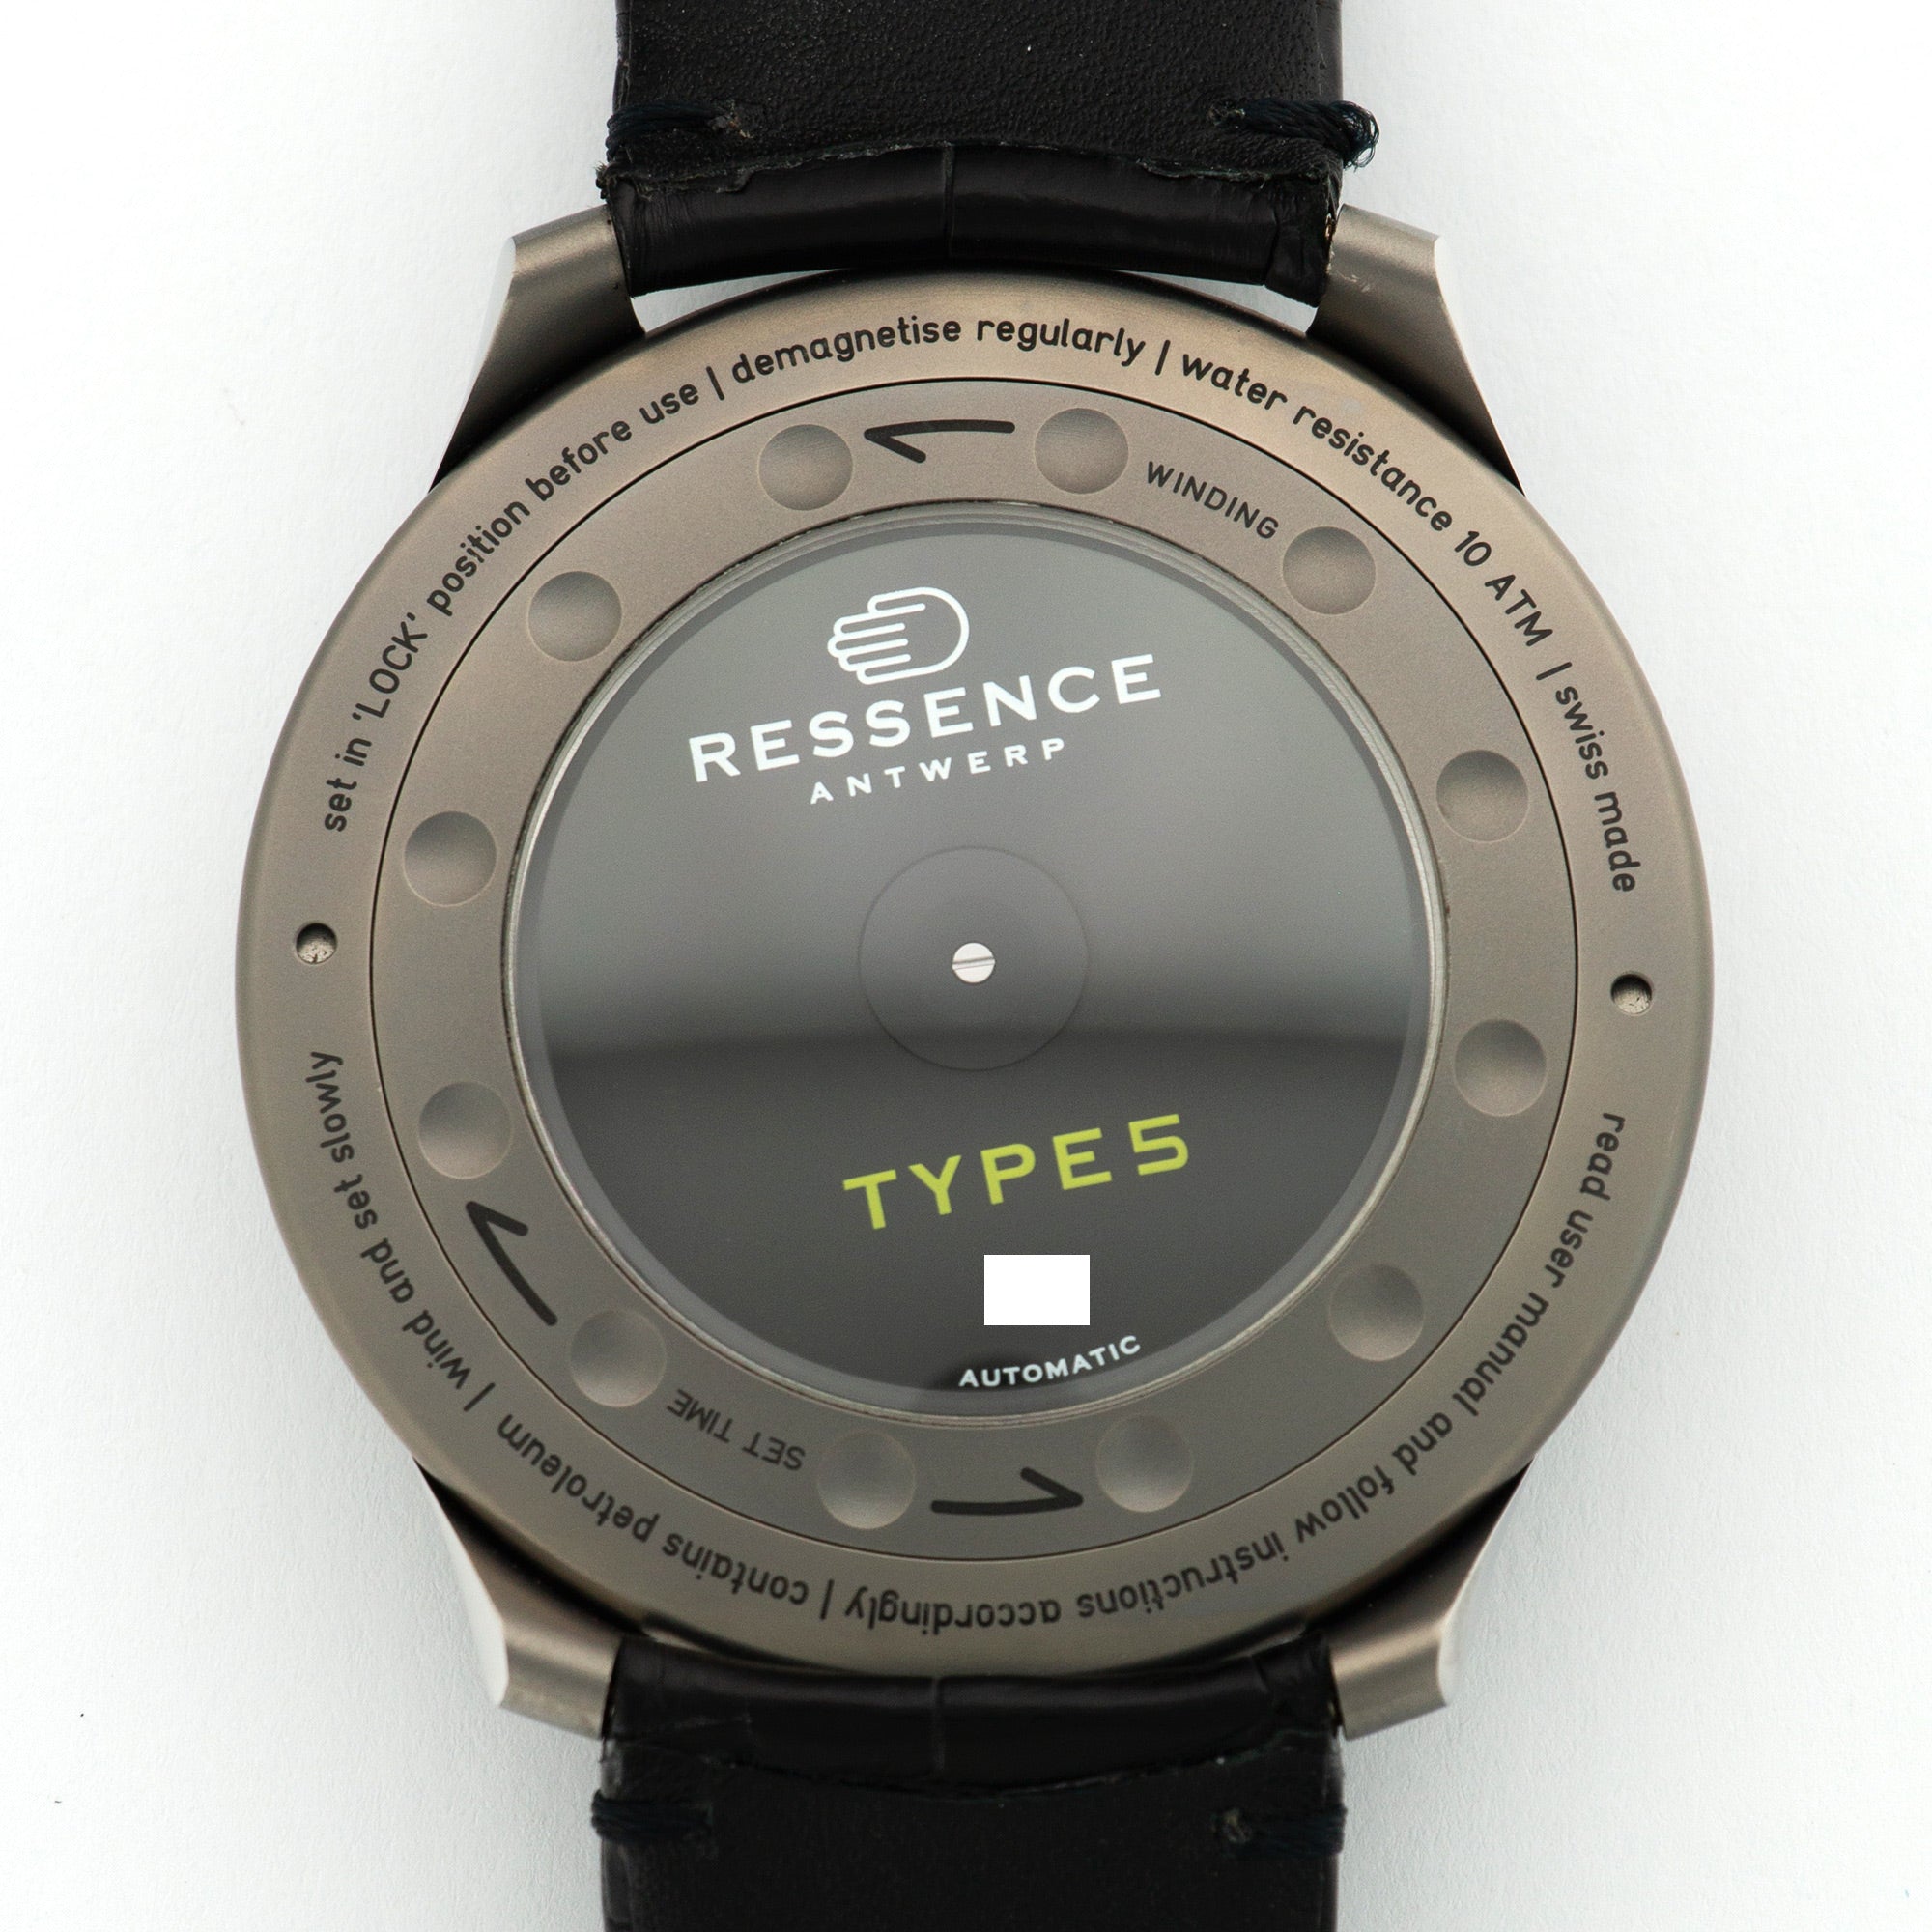 Ressence - Ressence Titanium Type 5 Automatic Watch - The Keystone Watches